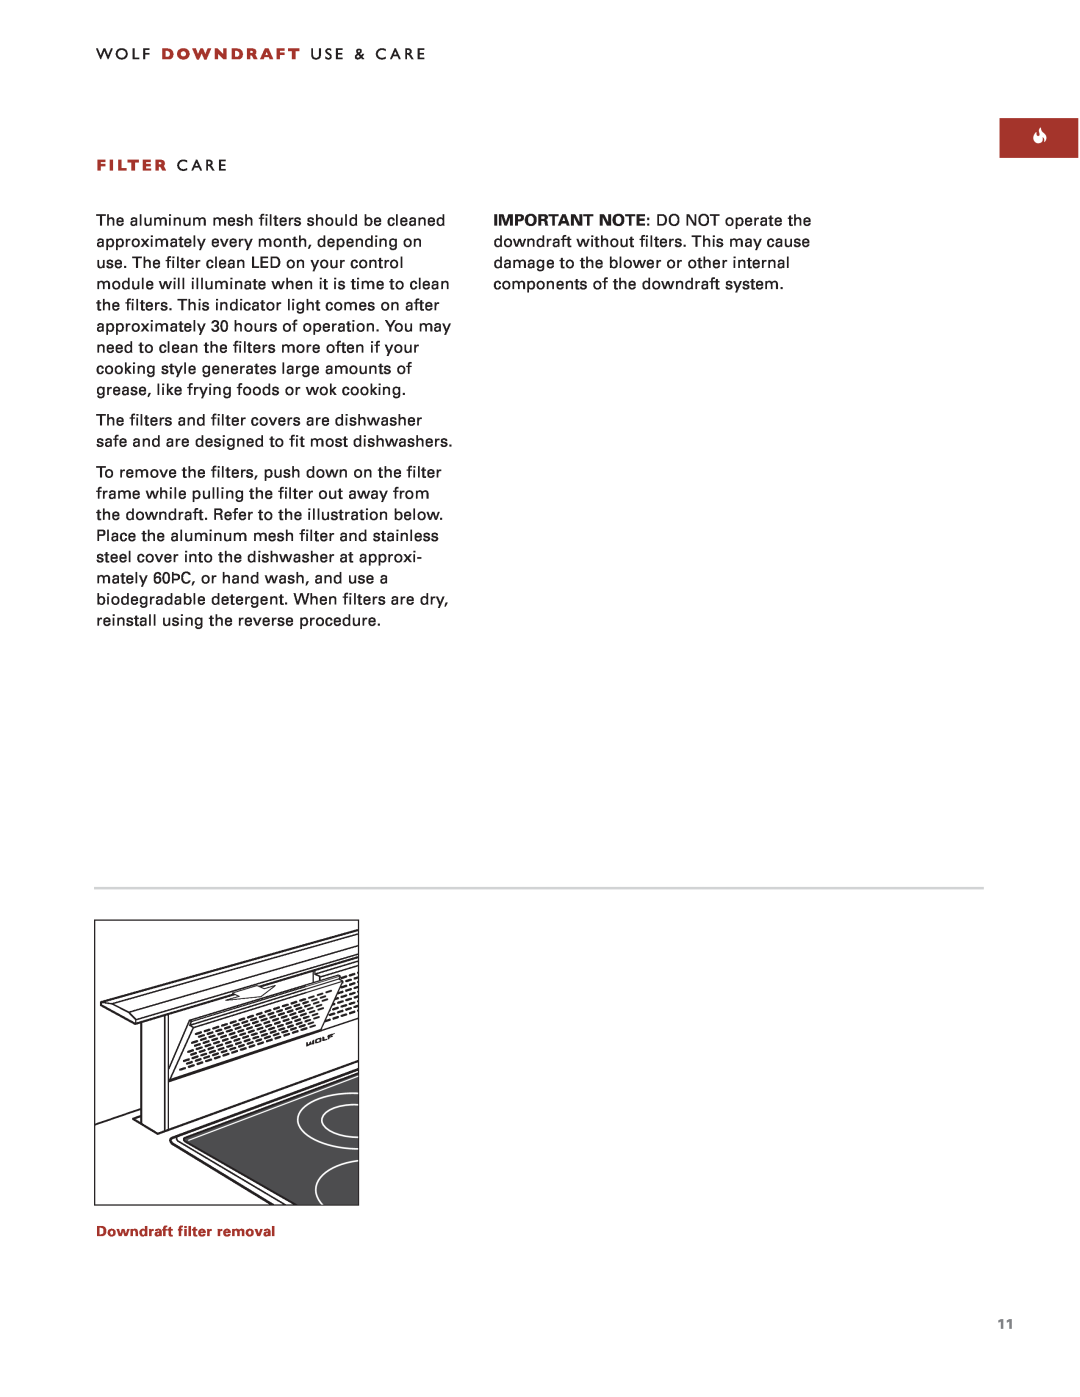 Sub-Zero Downdraft Ventilation manual Wolf D O W N D R A F T Use & Care F I Lt E R Care, Downdraft filter removal 